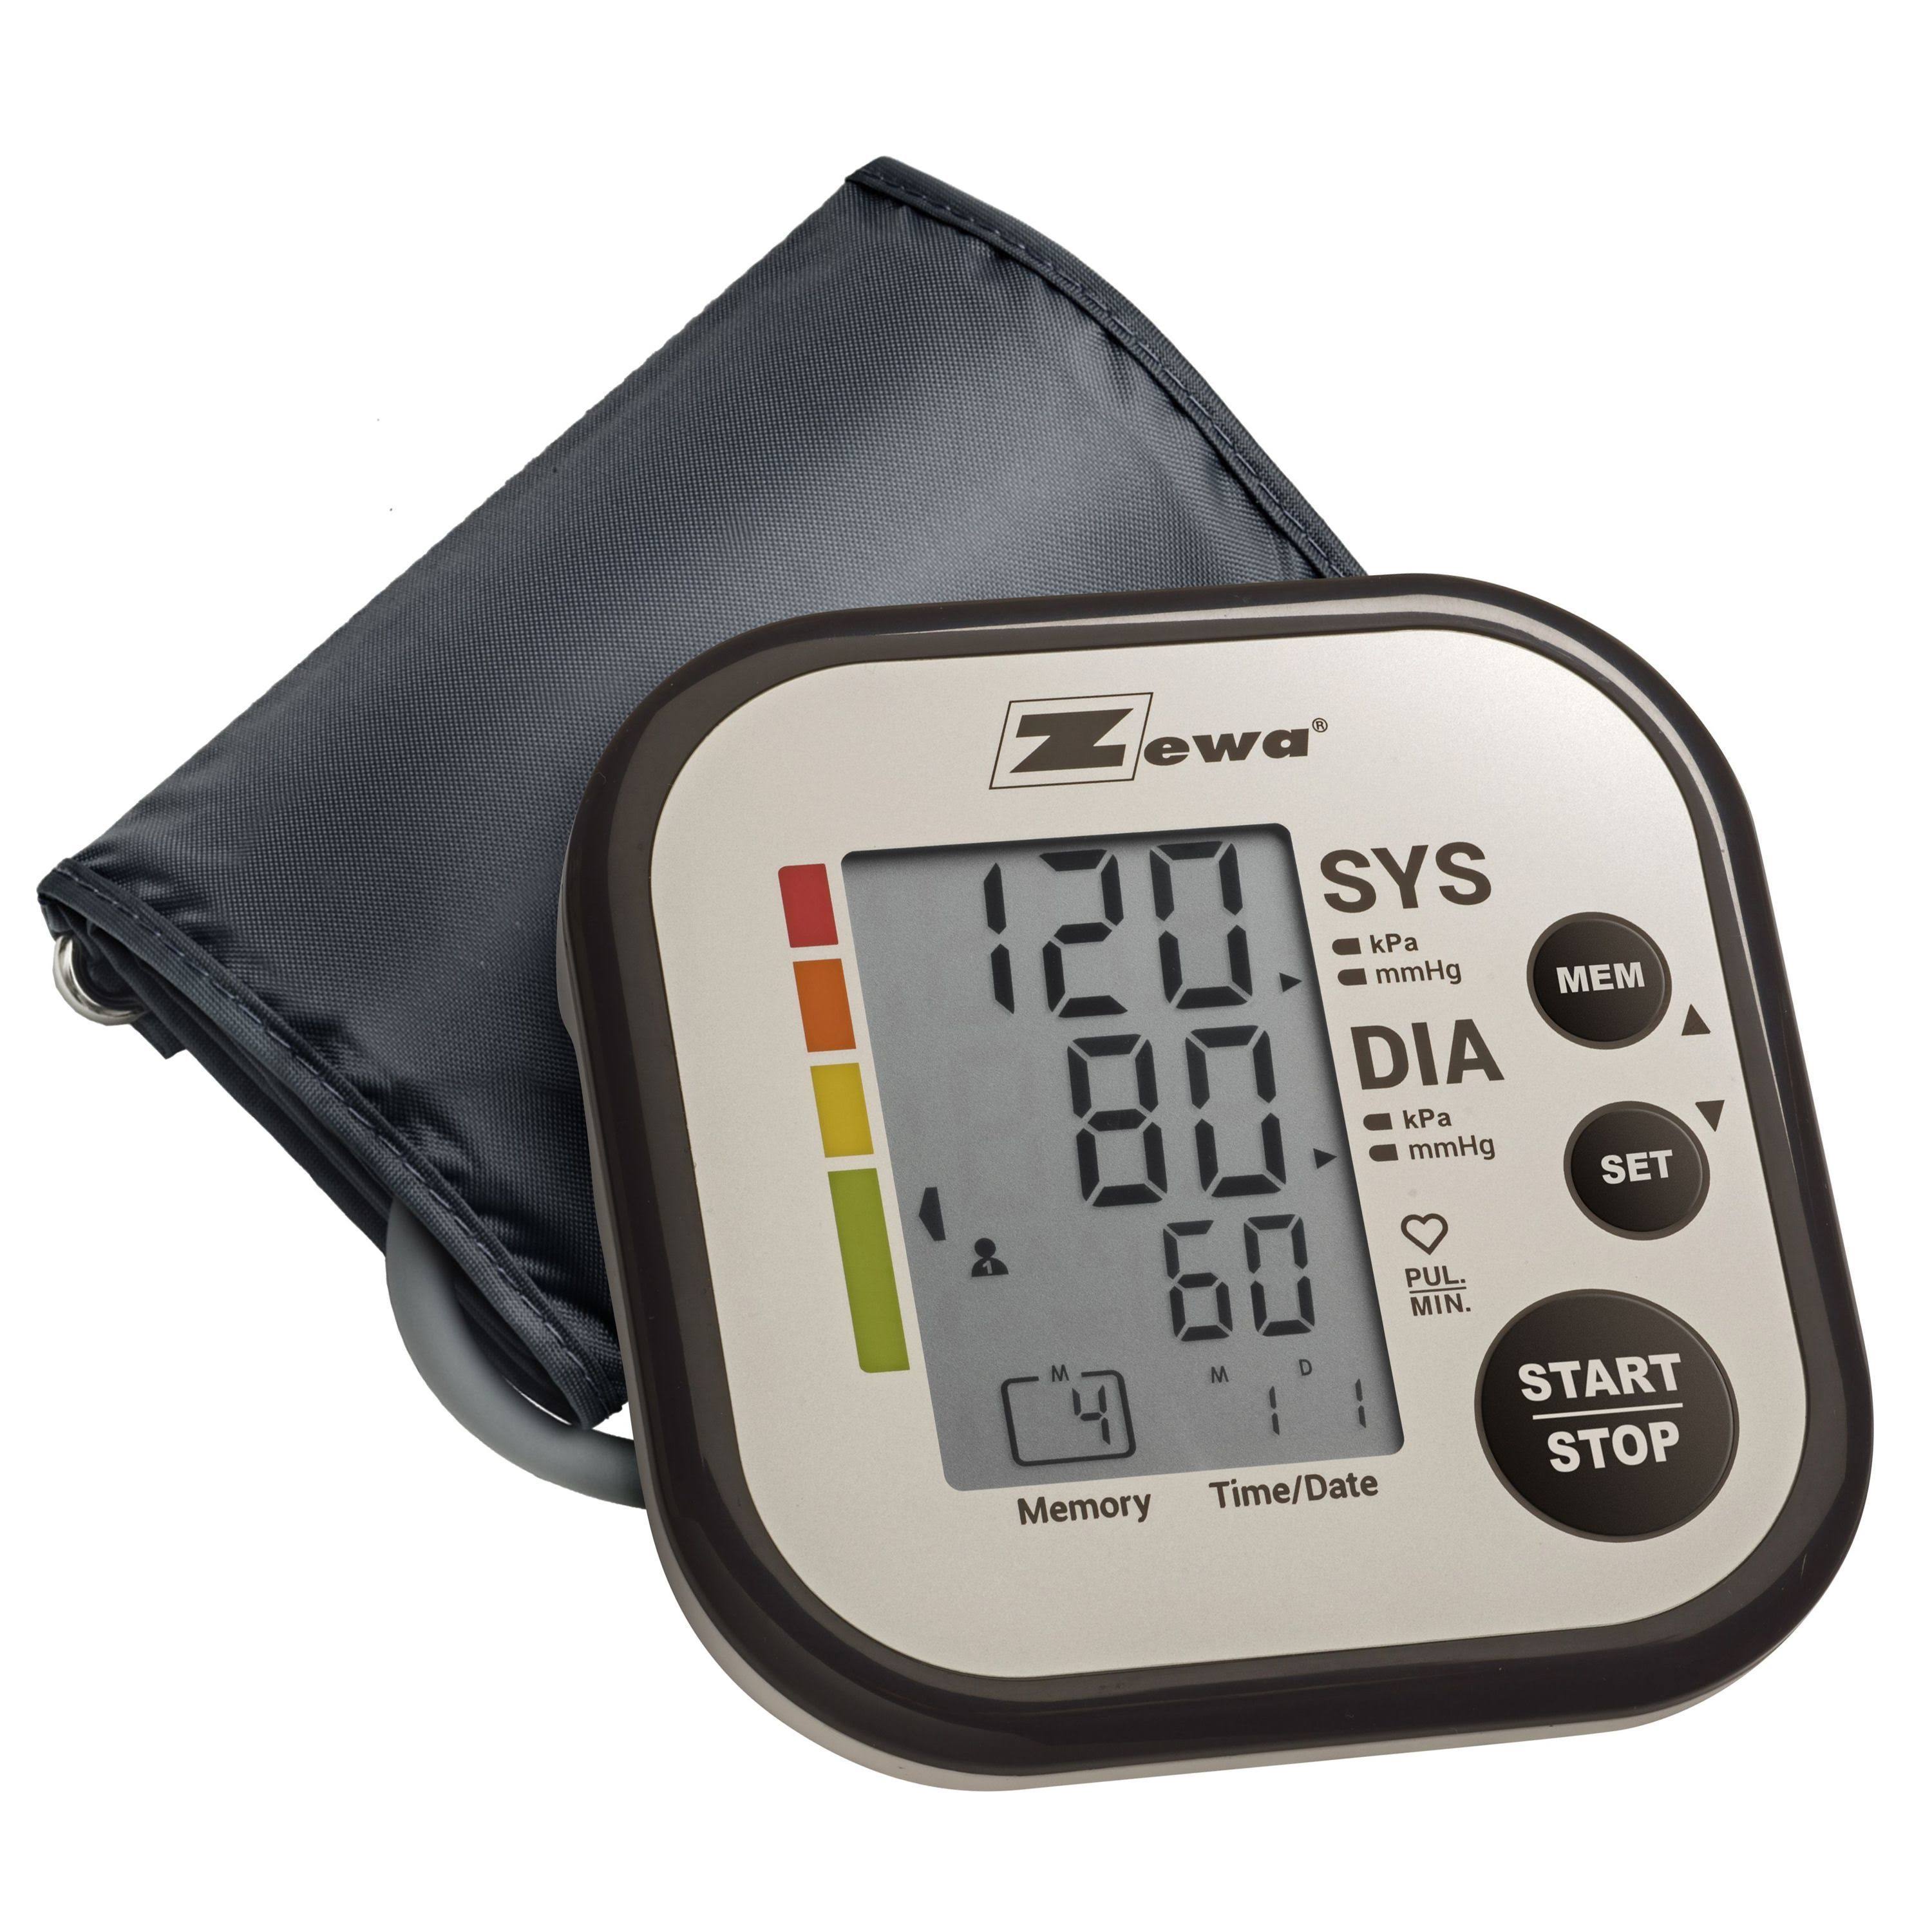 Zewa Uam-710 Automatic Blood Pressure Monitor